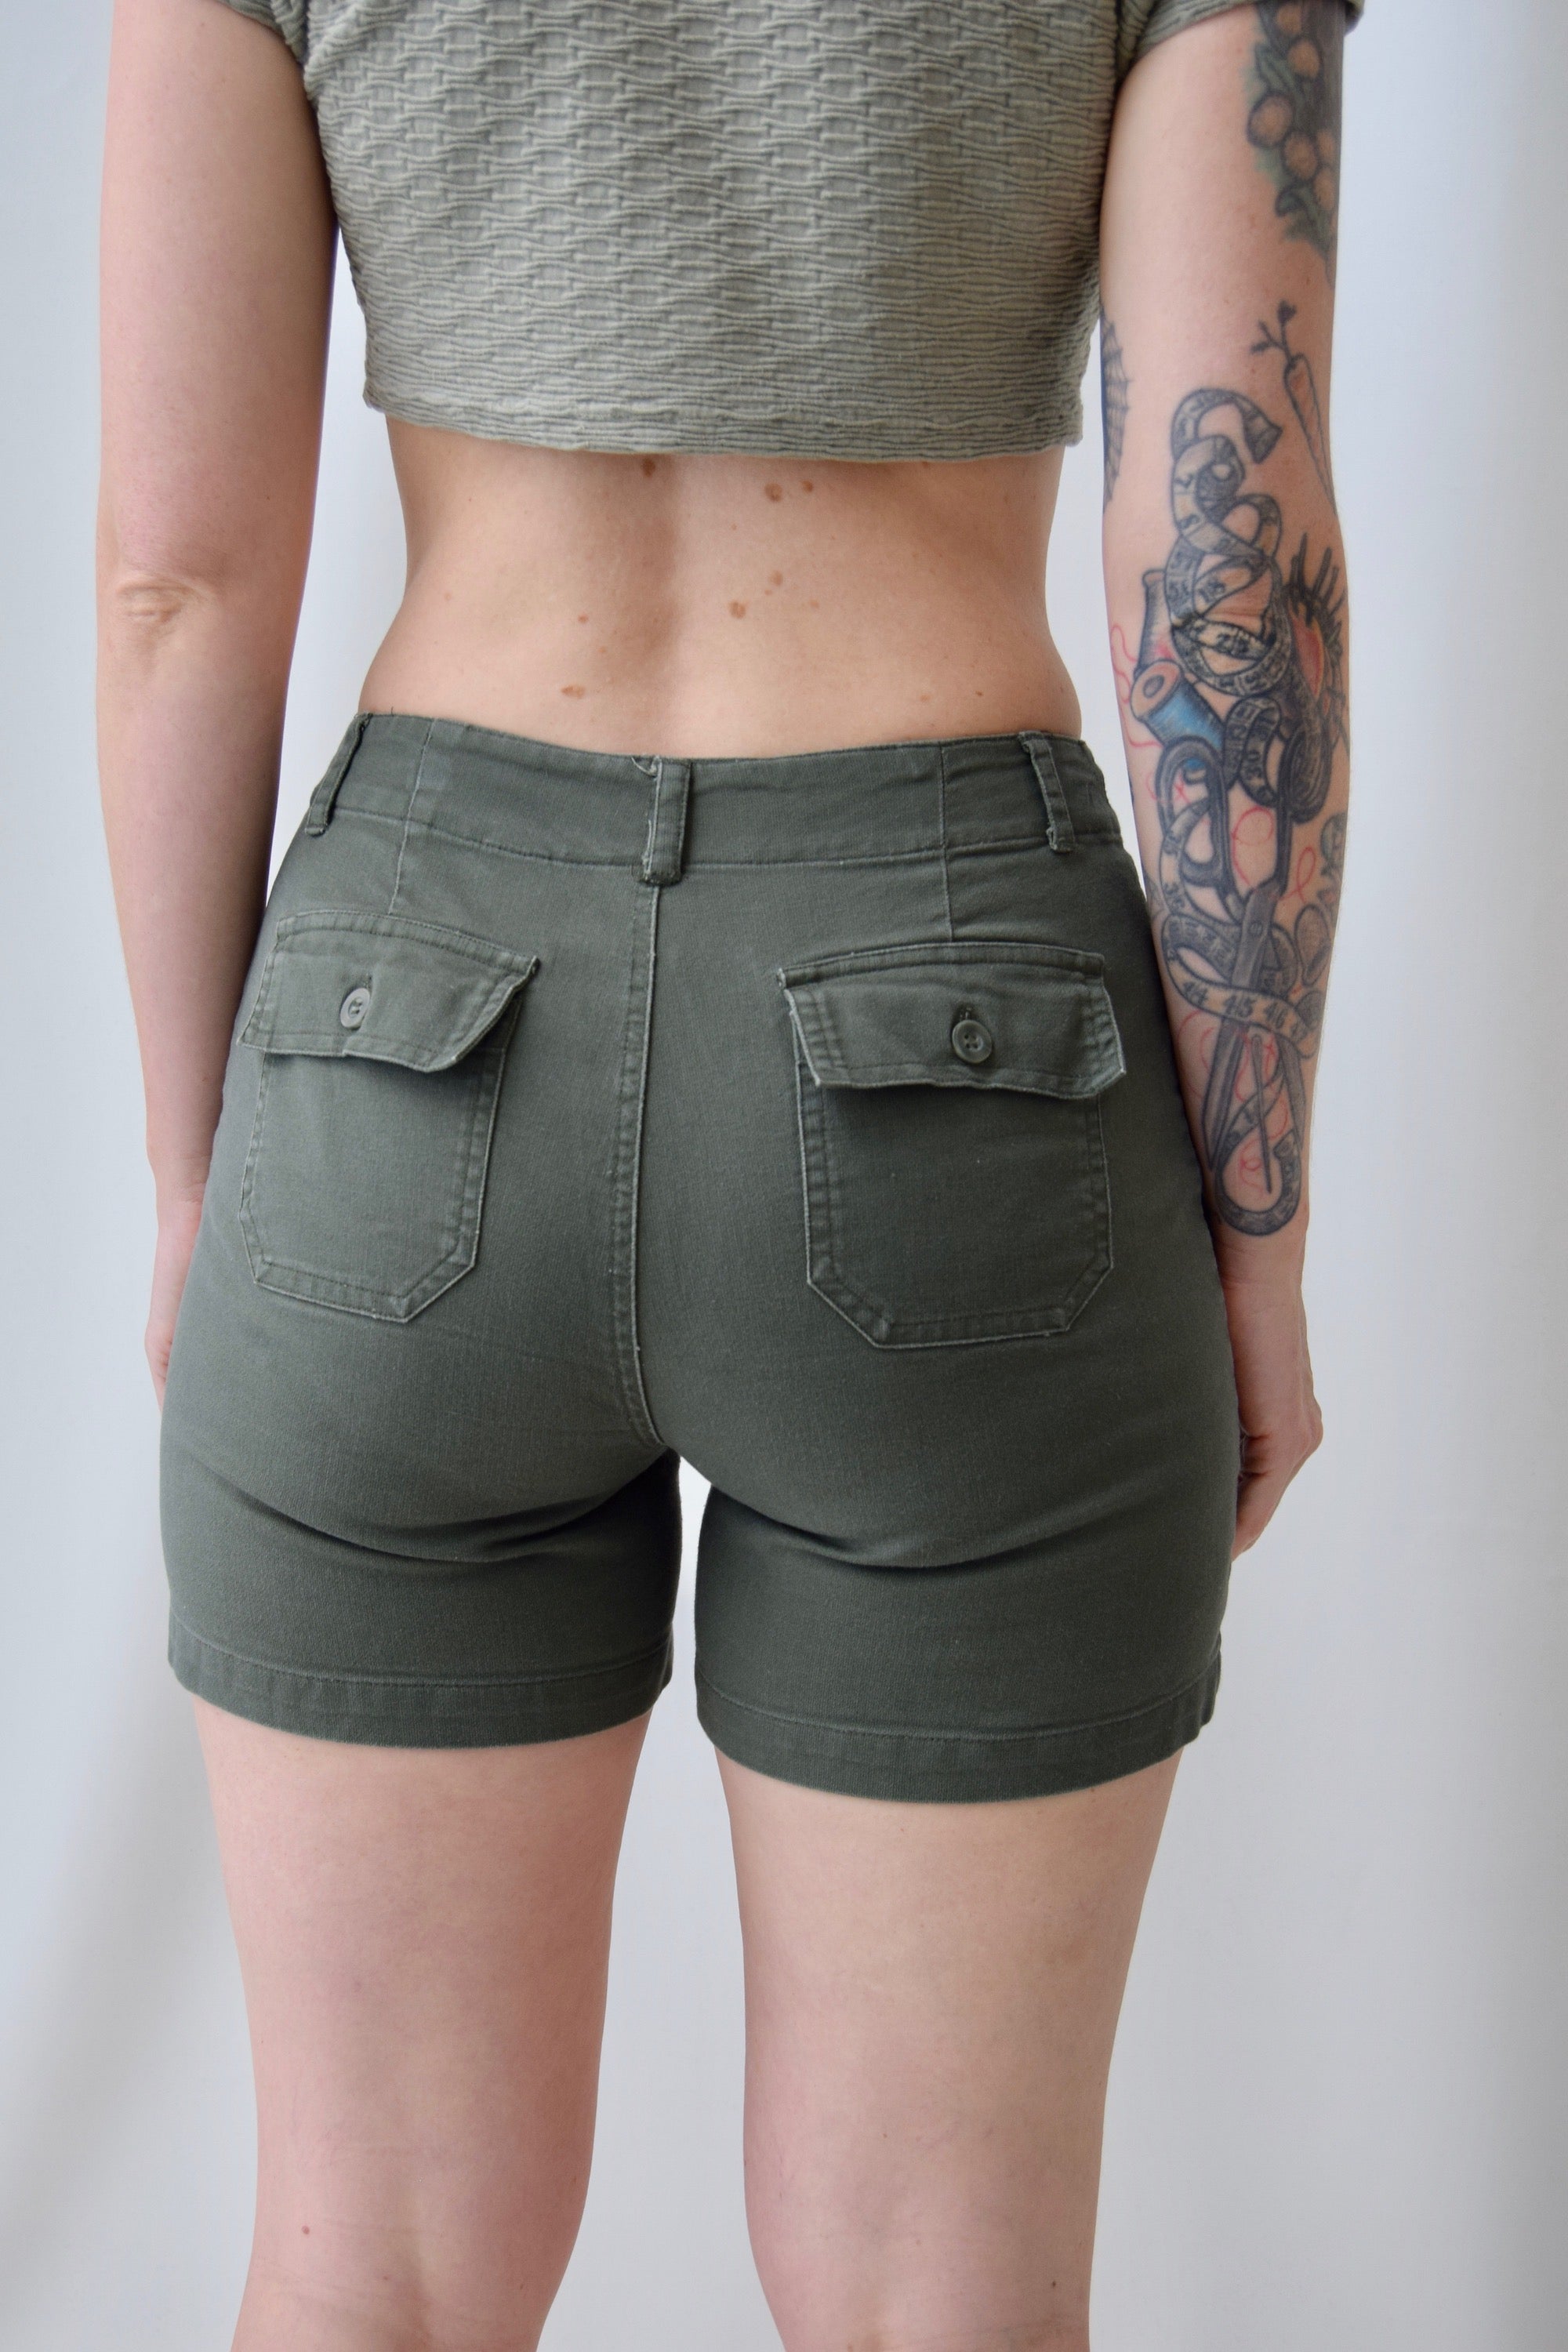 Army Green Cargo Shorts